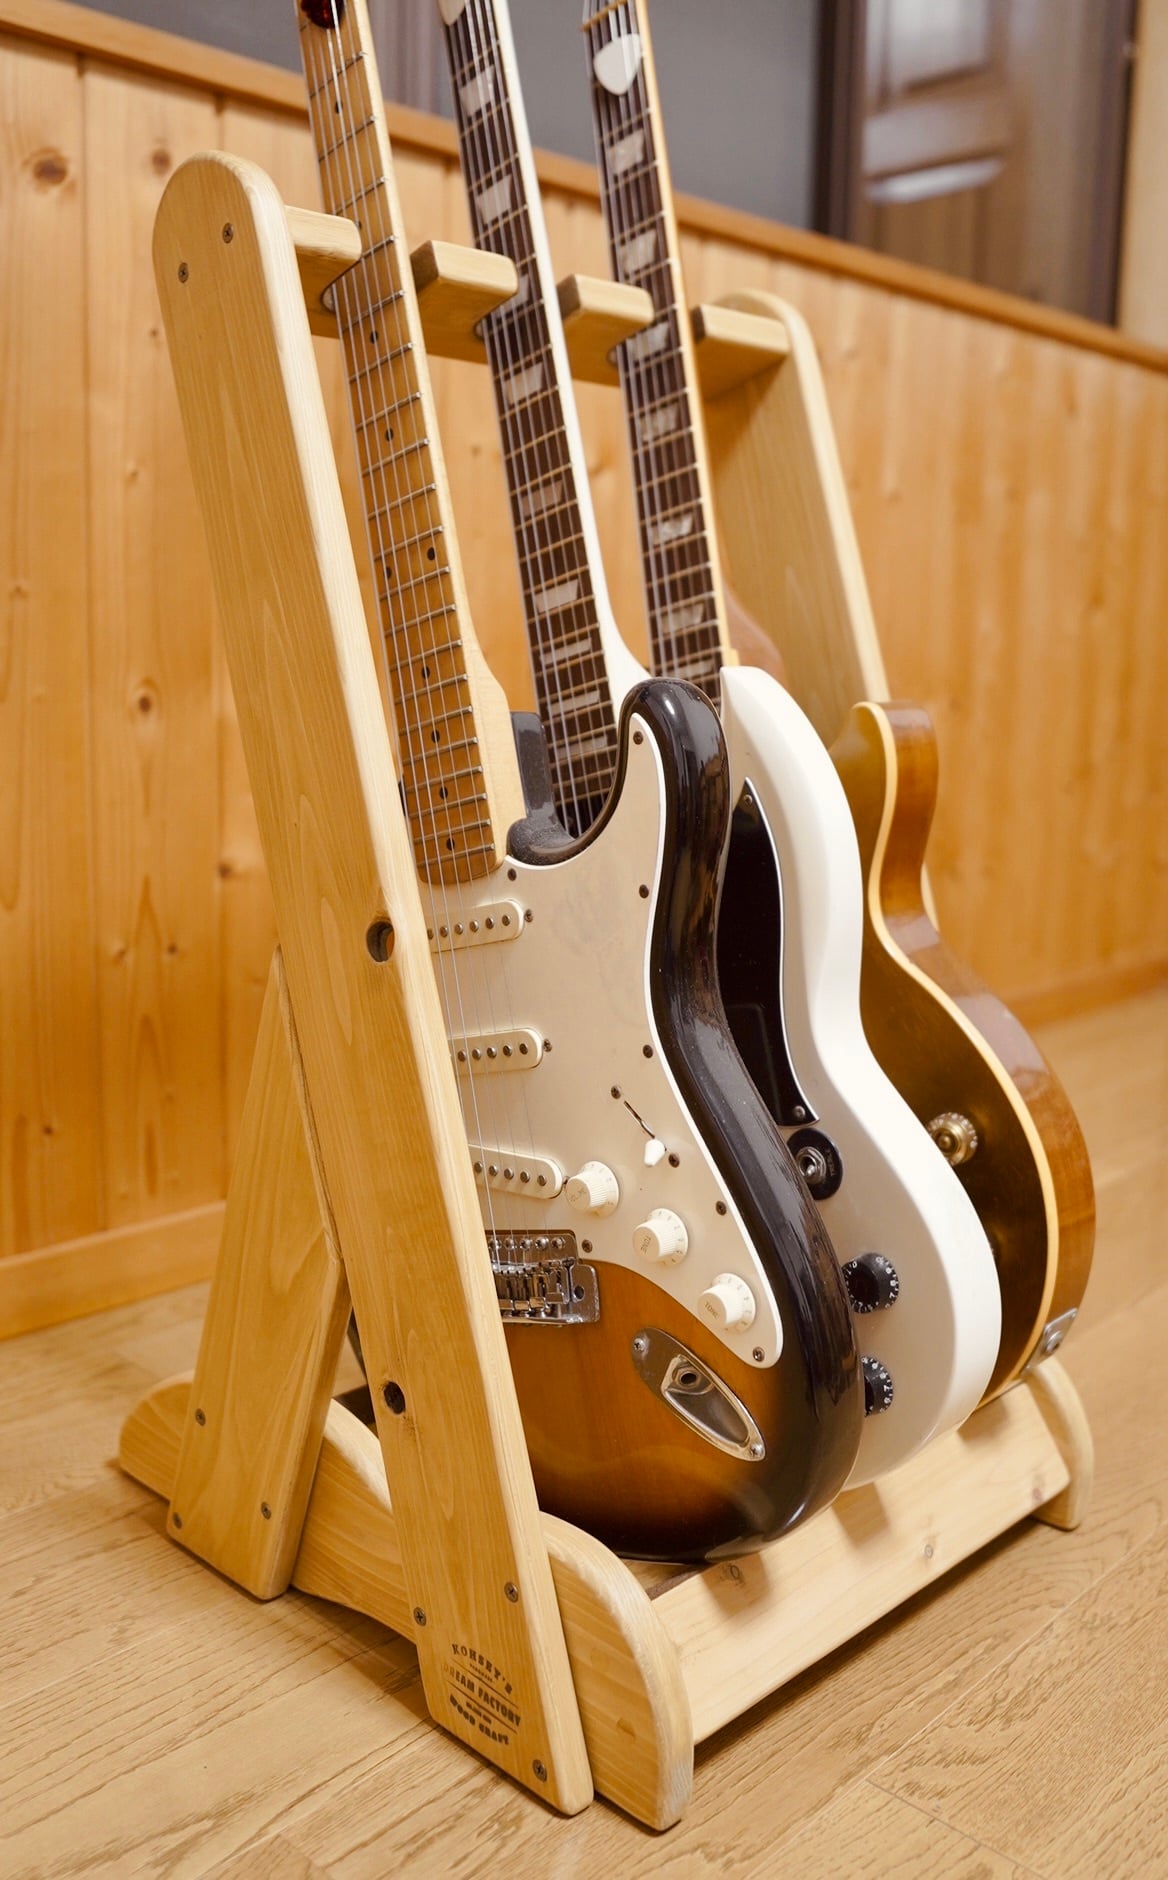 Wooden Guitar Stand 木製 ギタースタンド ナチュラル - ギター